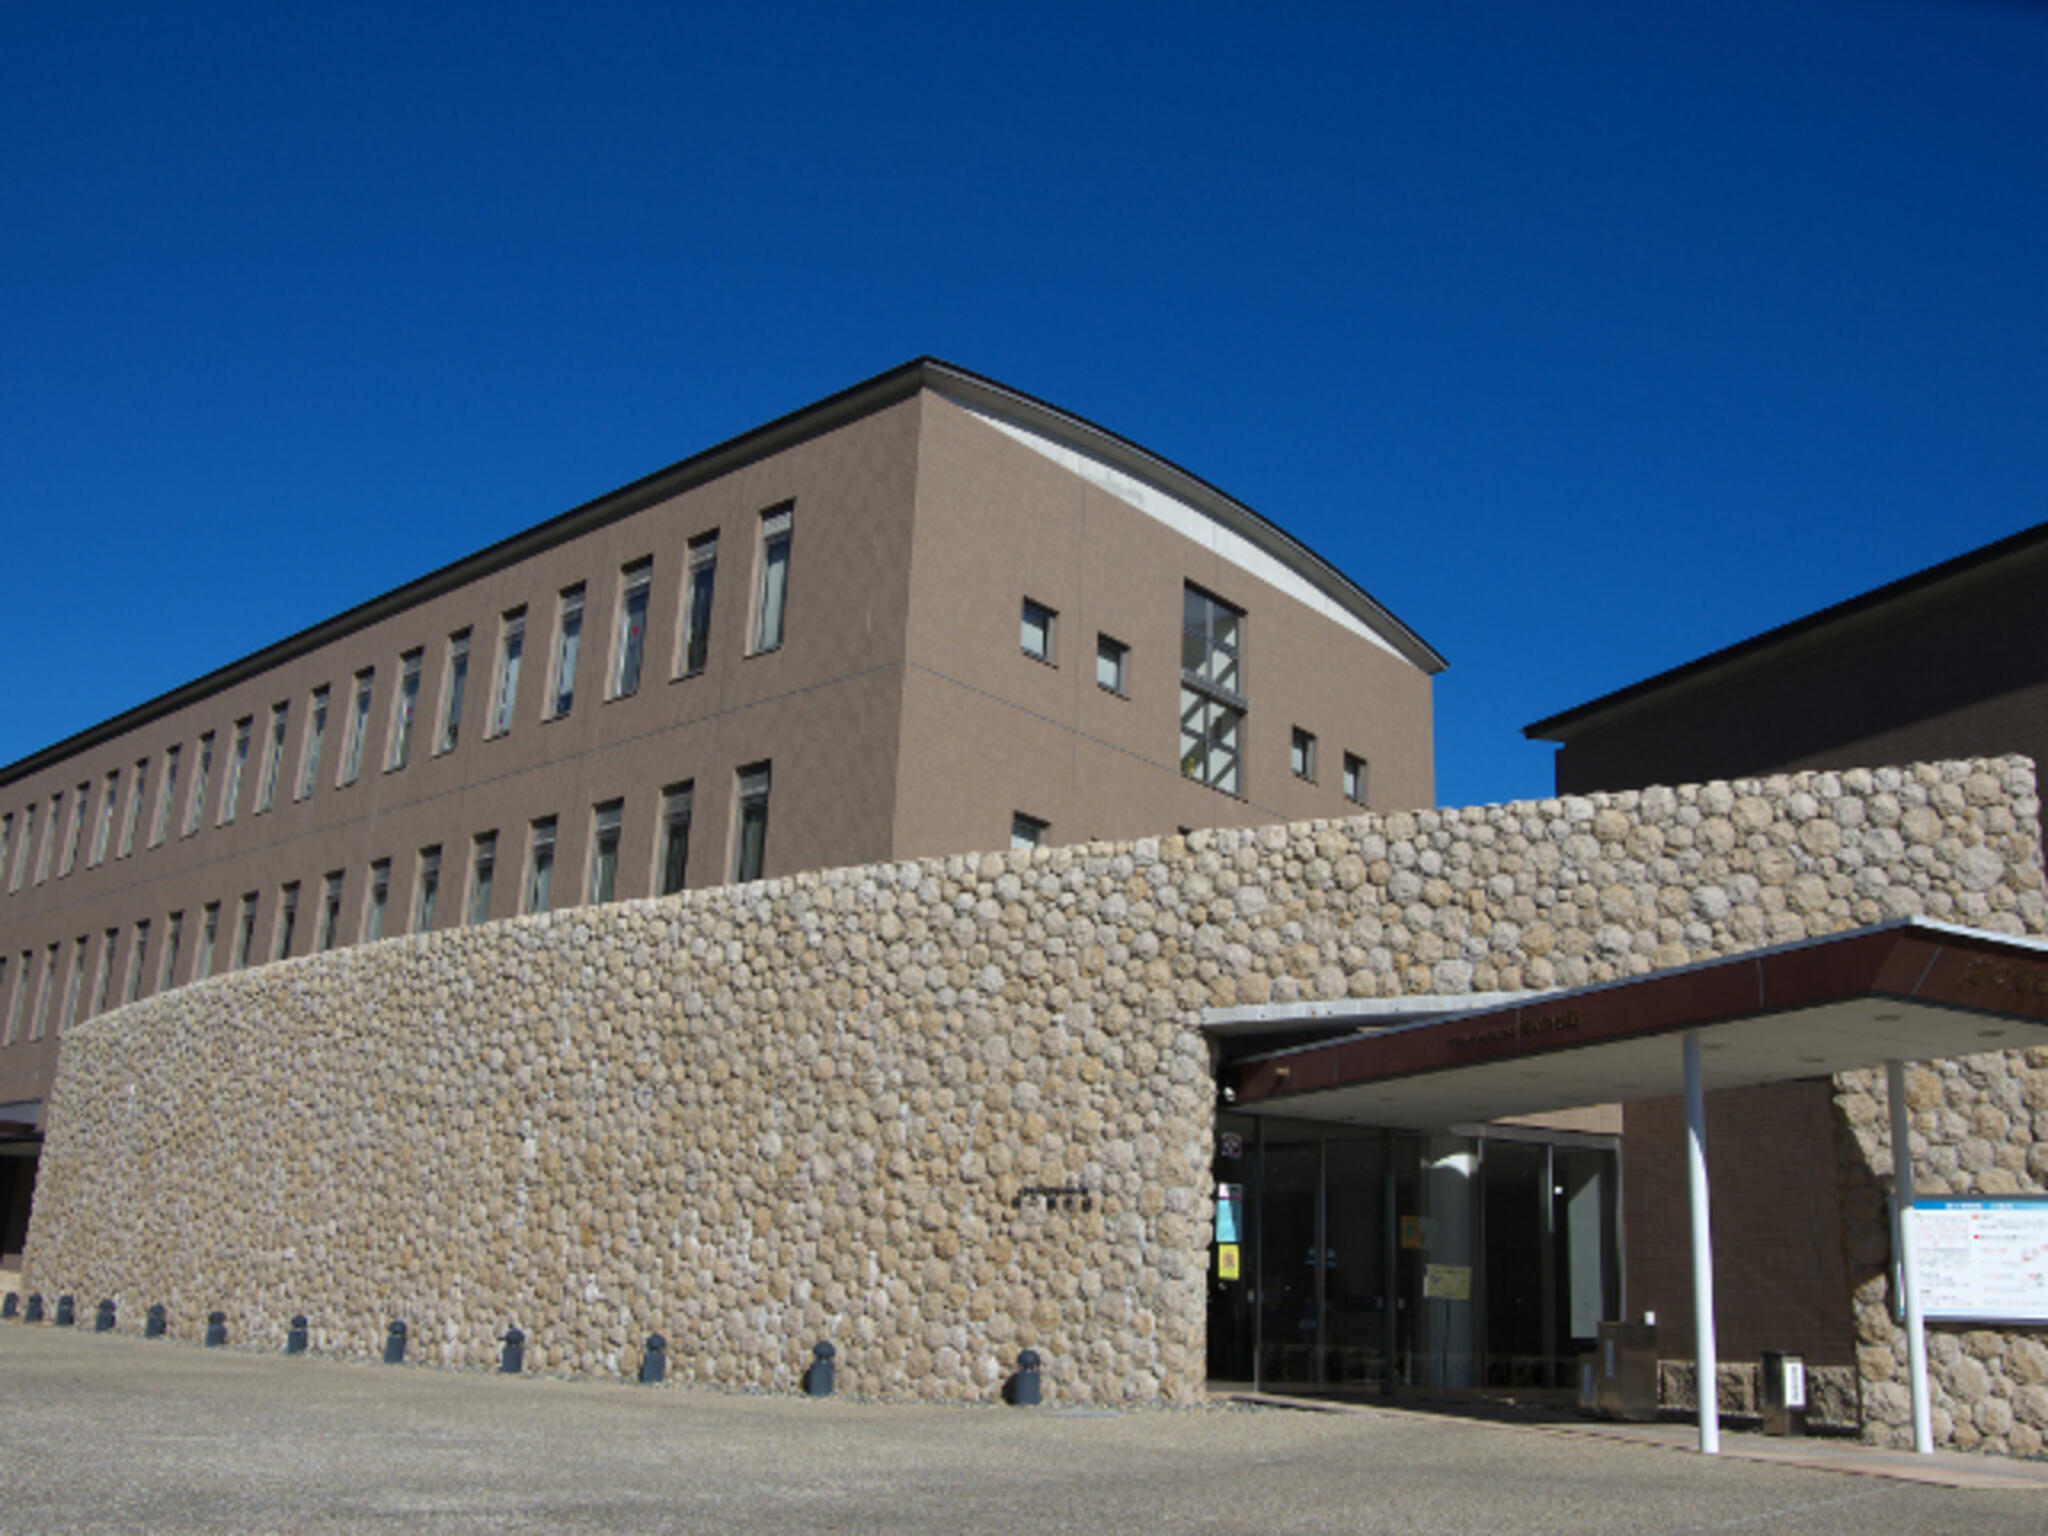 千葉県立中央博物館分館 海の博物館の代表写真1